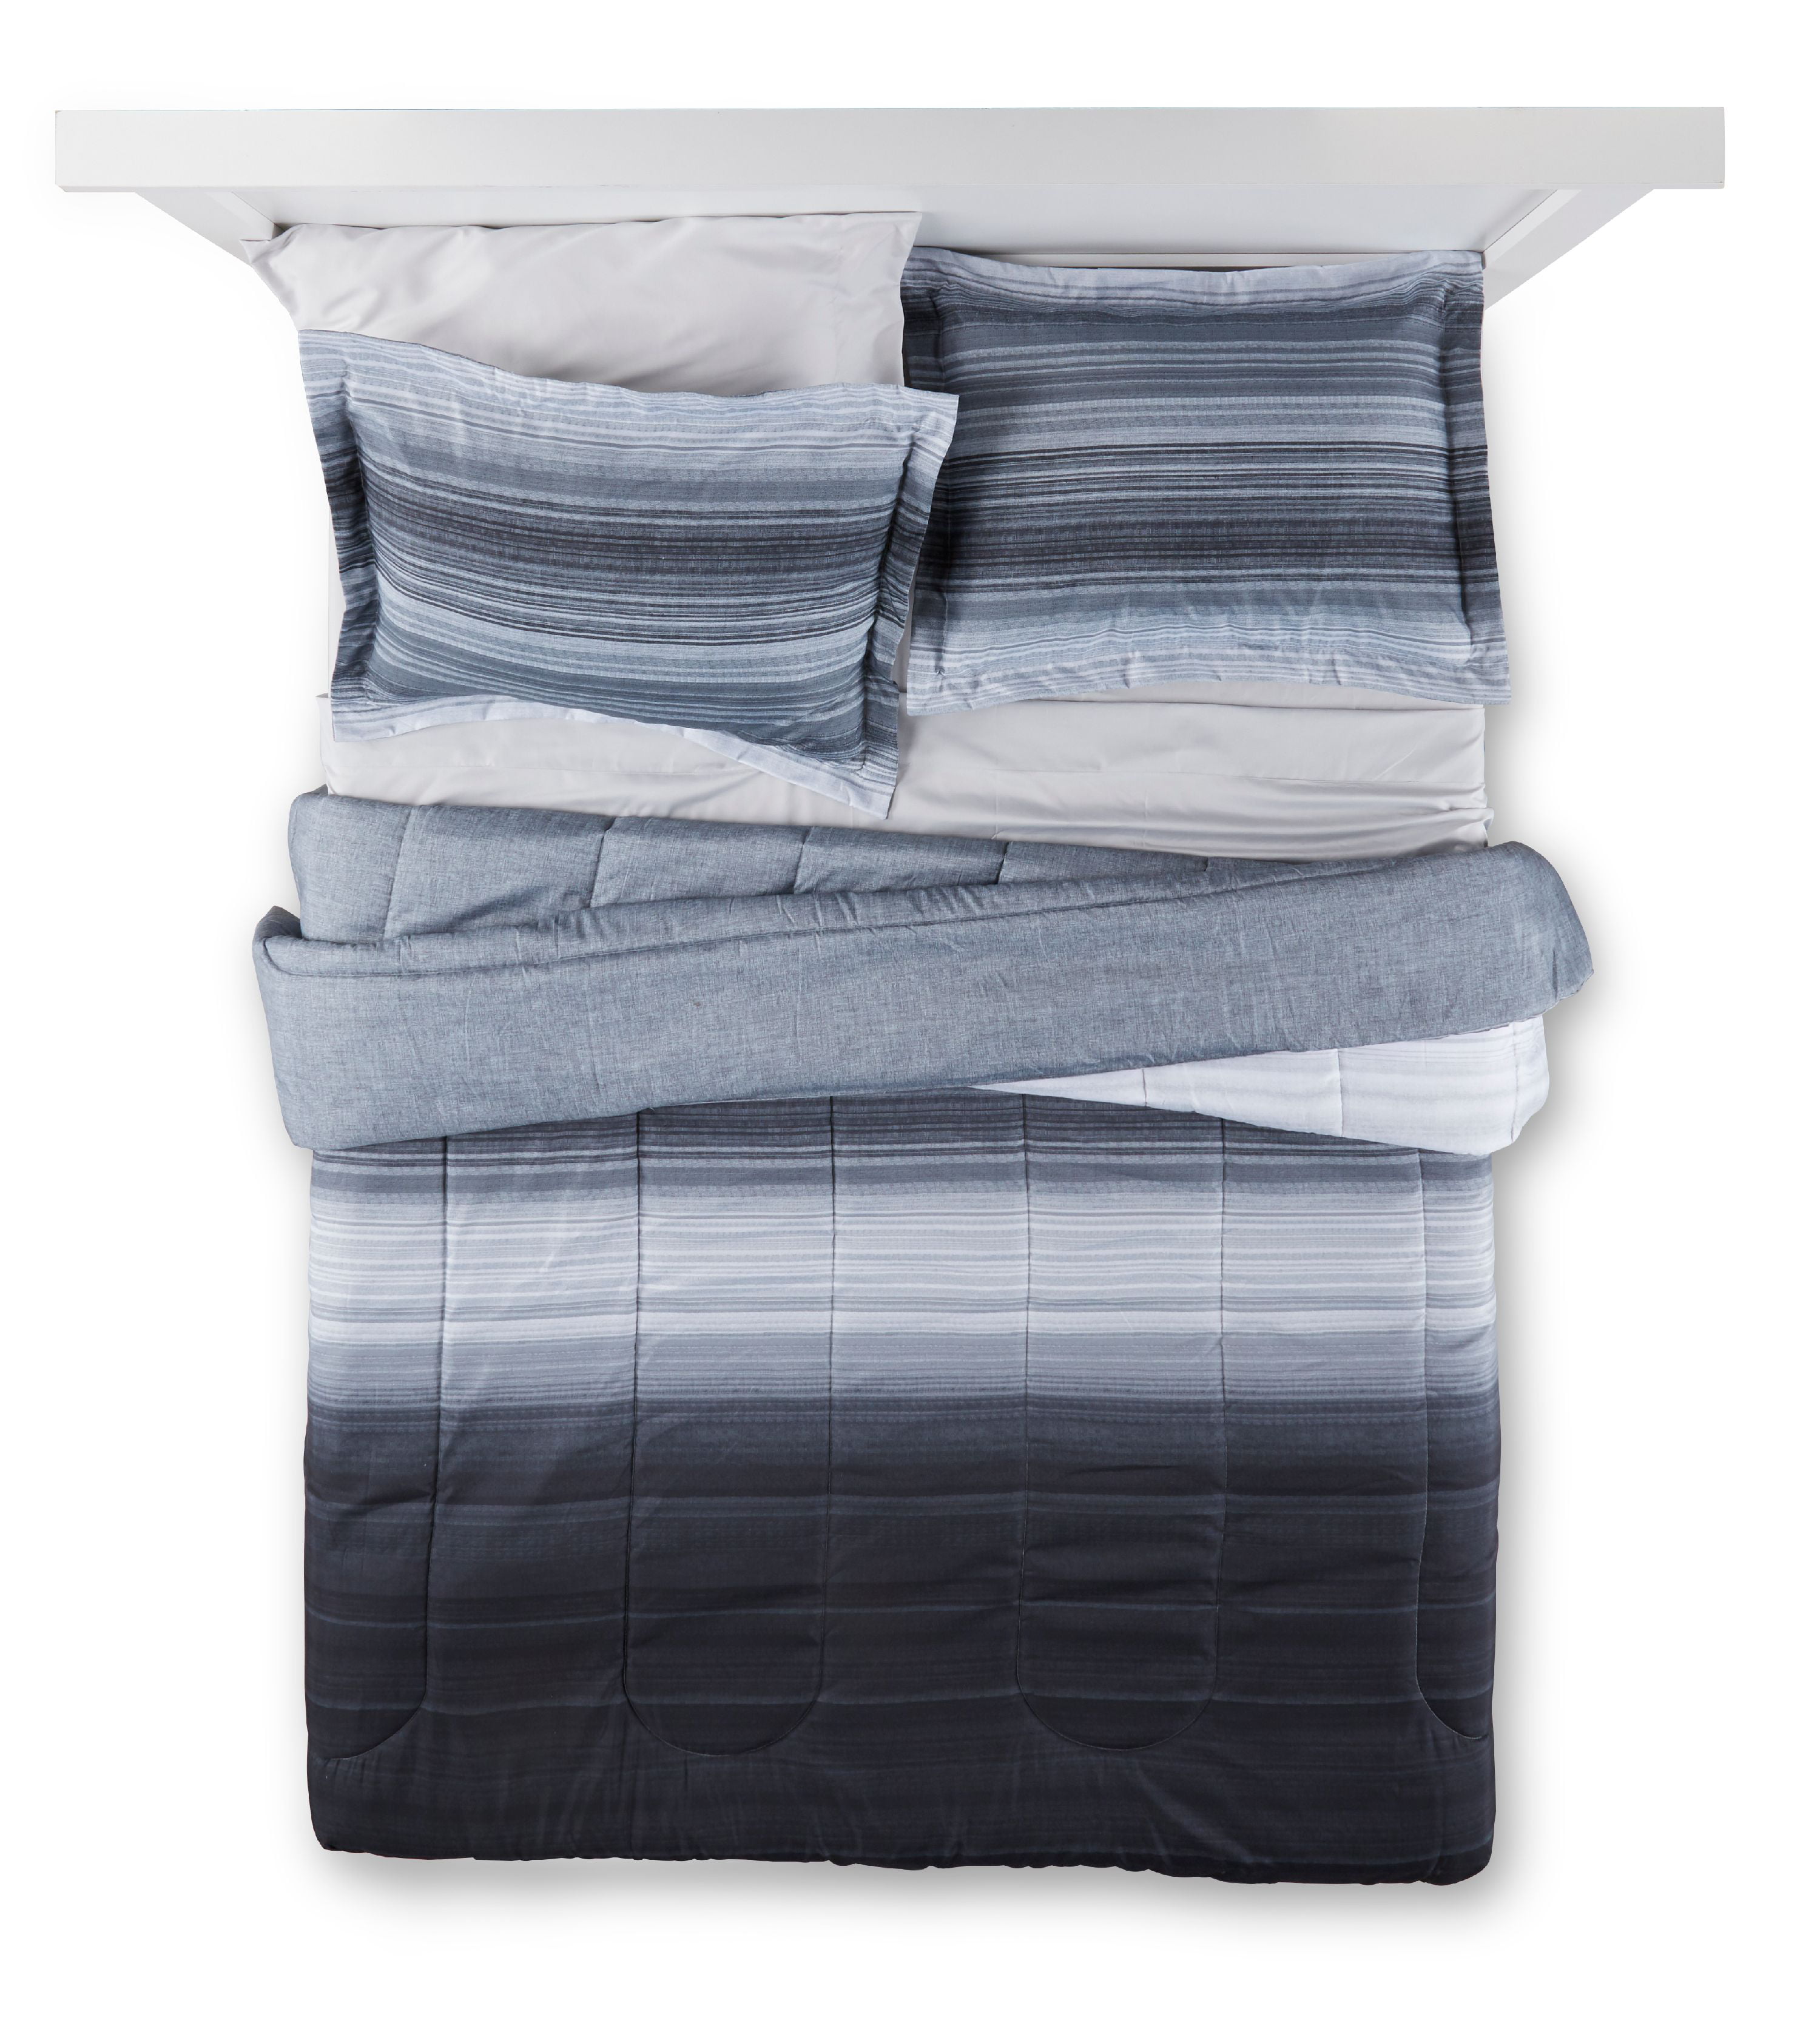 Mainstays Ombre Grey Bed in a Bag Bedding, Full, Grey - Walmart.com ...